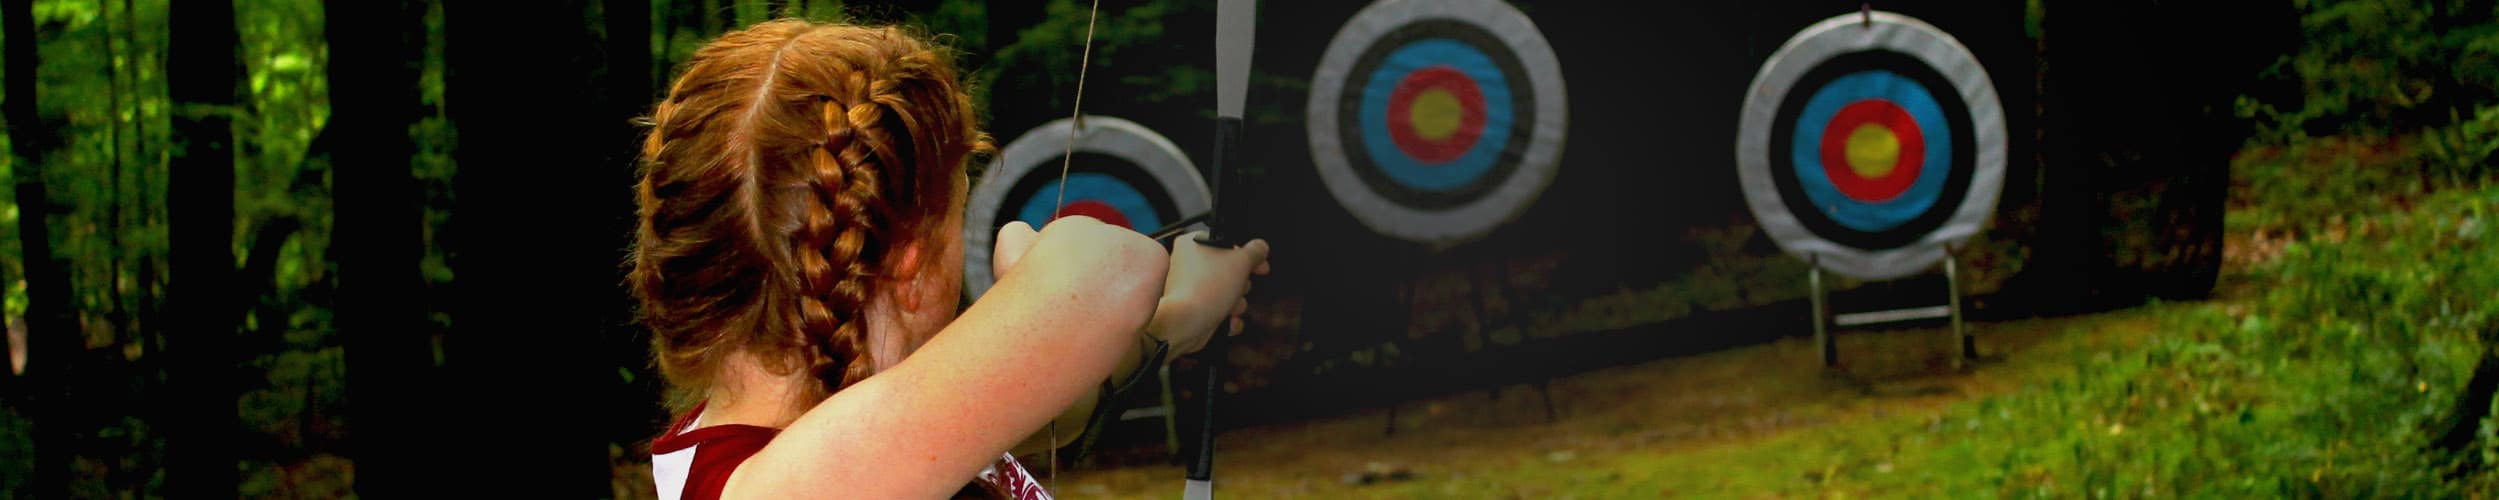 Little girl shooting a bow and arrow